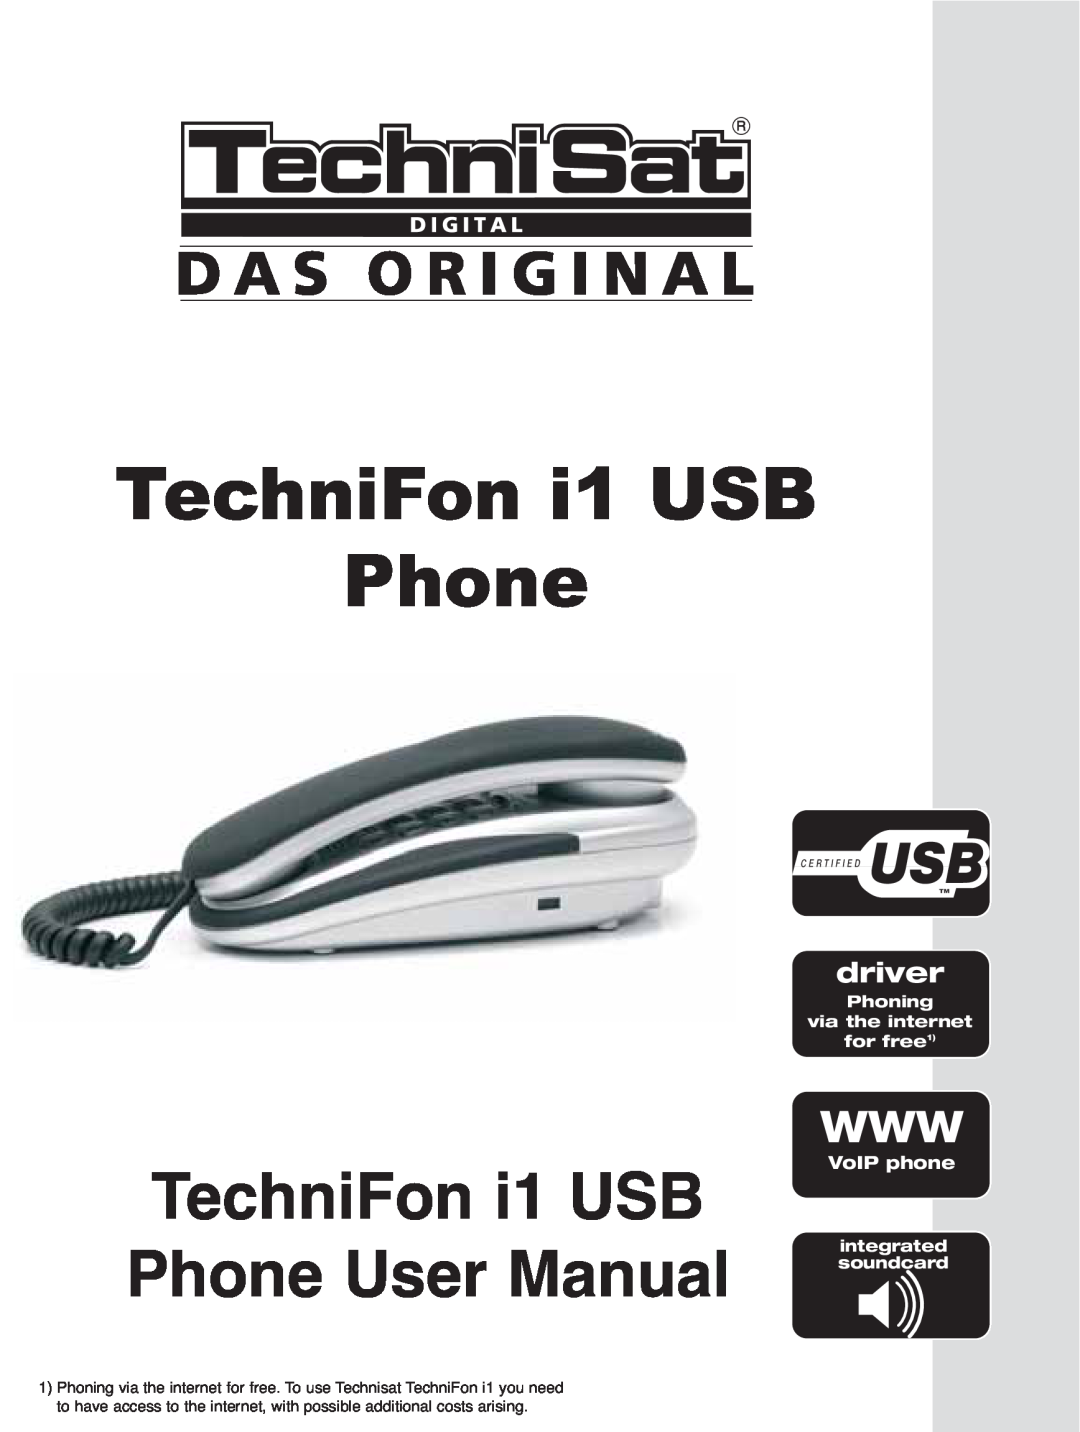 TechniSat user manual TechniFon i1 USB Phone User Manual, driver, Phoning via the internet for free1 